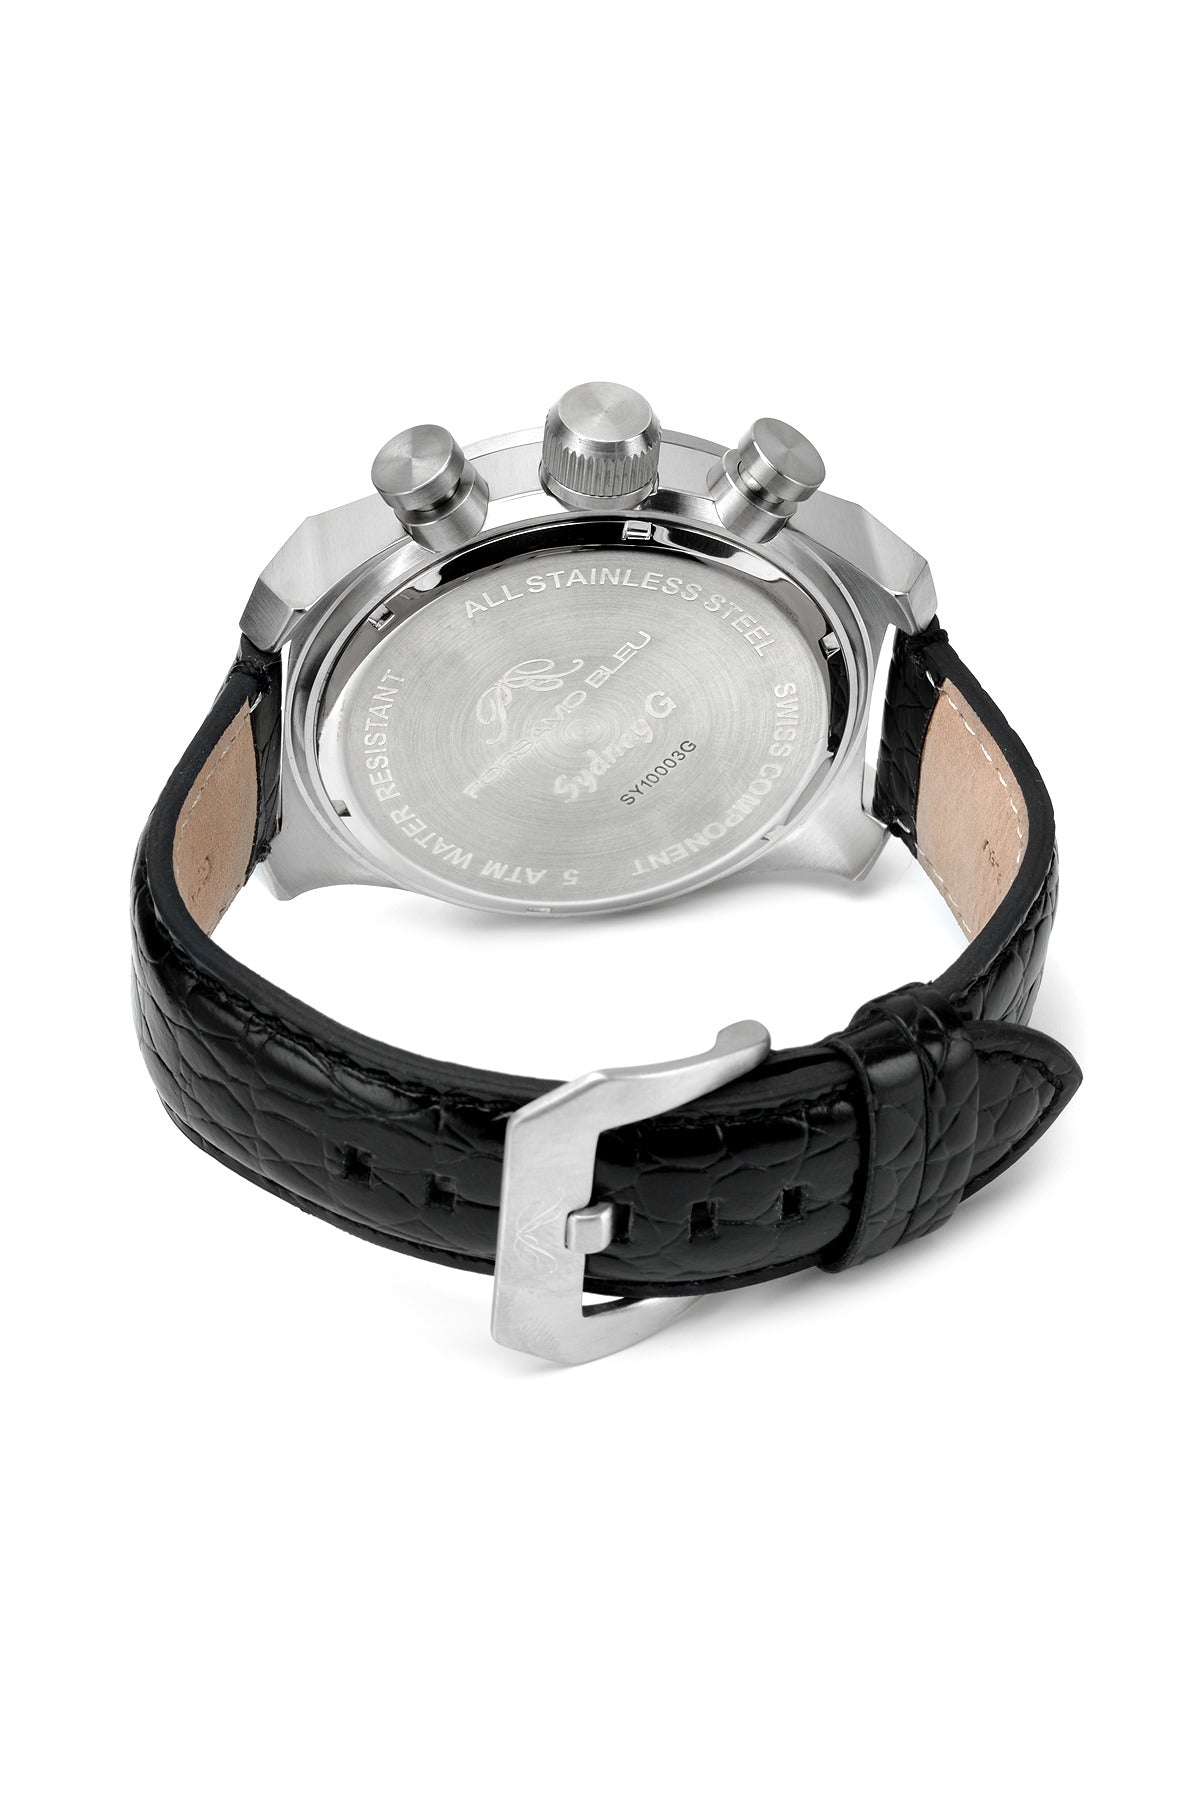 Porsamo Bleu Sydney G luxury men's watch, genuine leather band, silver, black 233BSGL